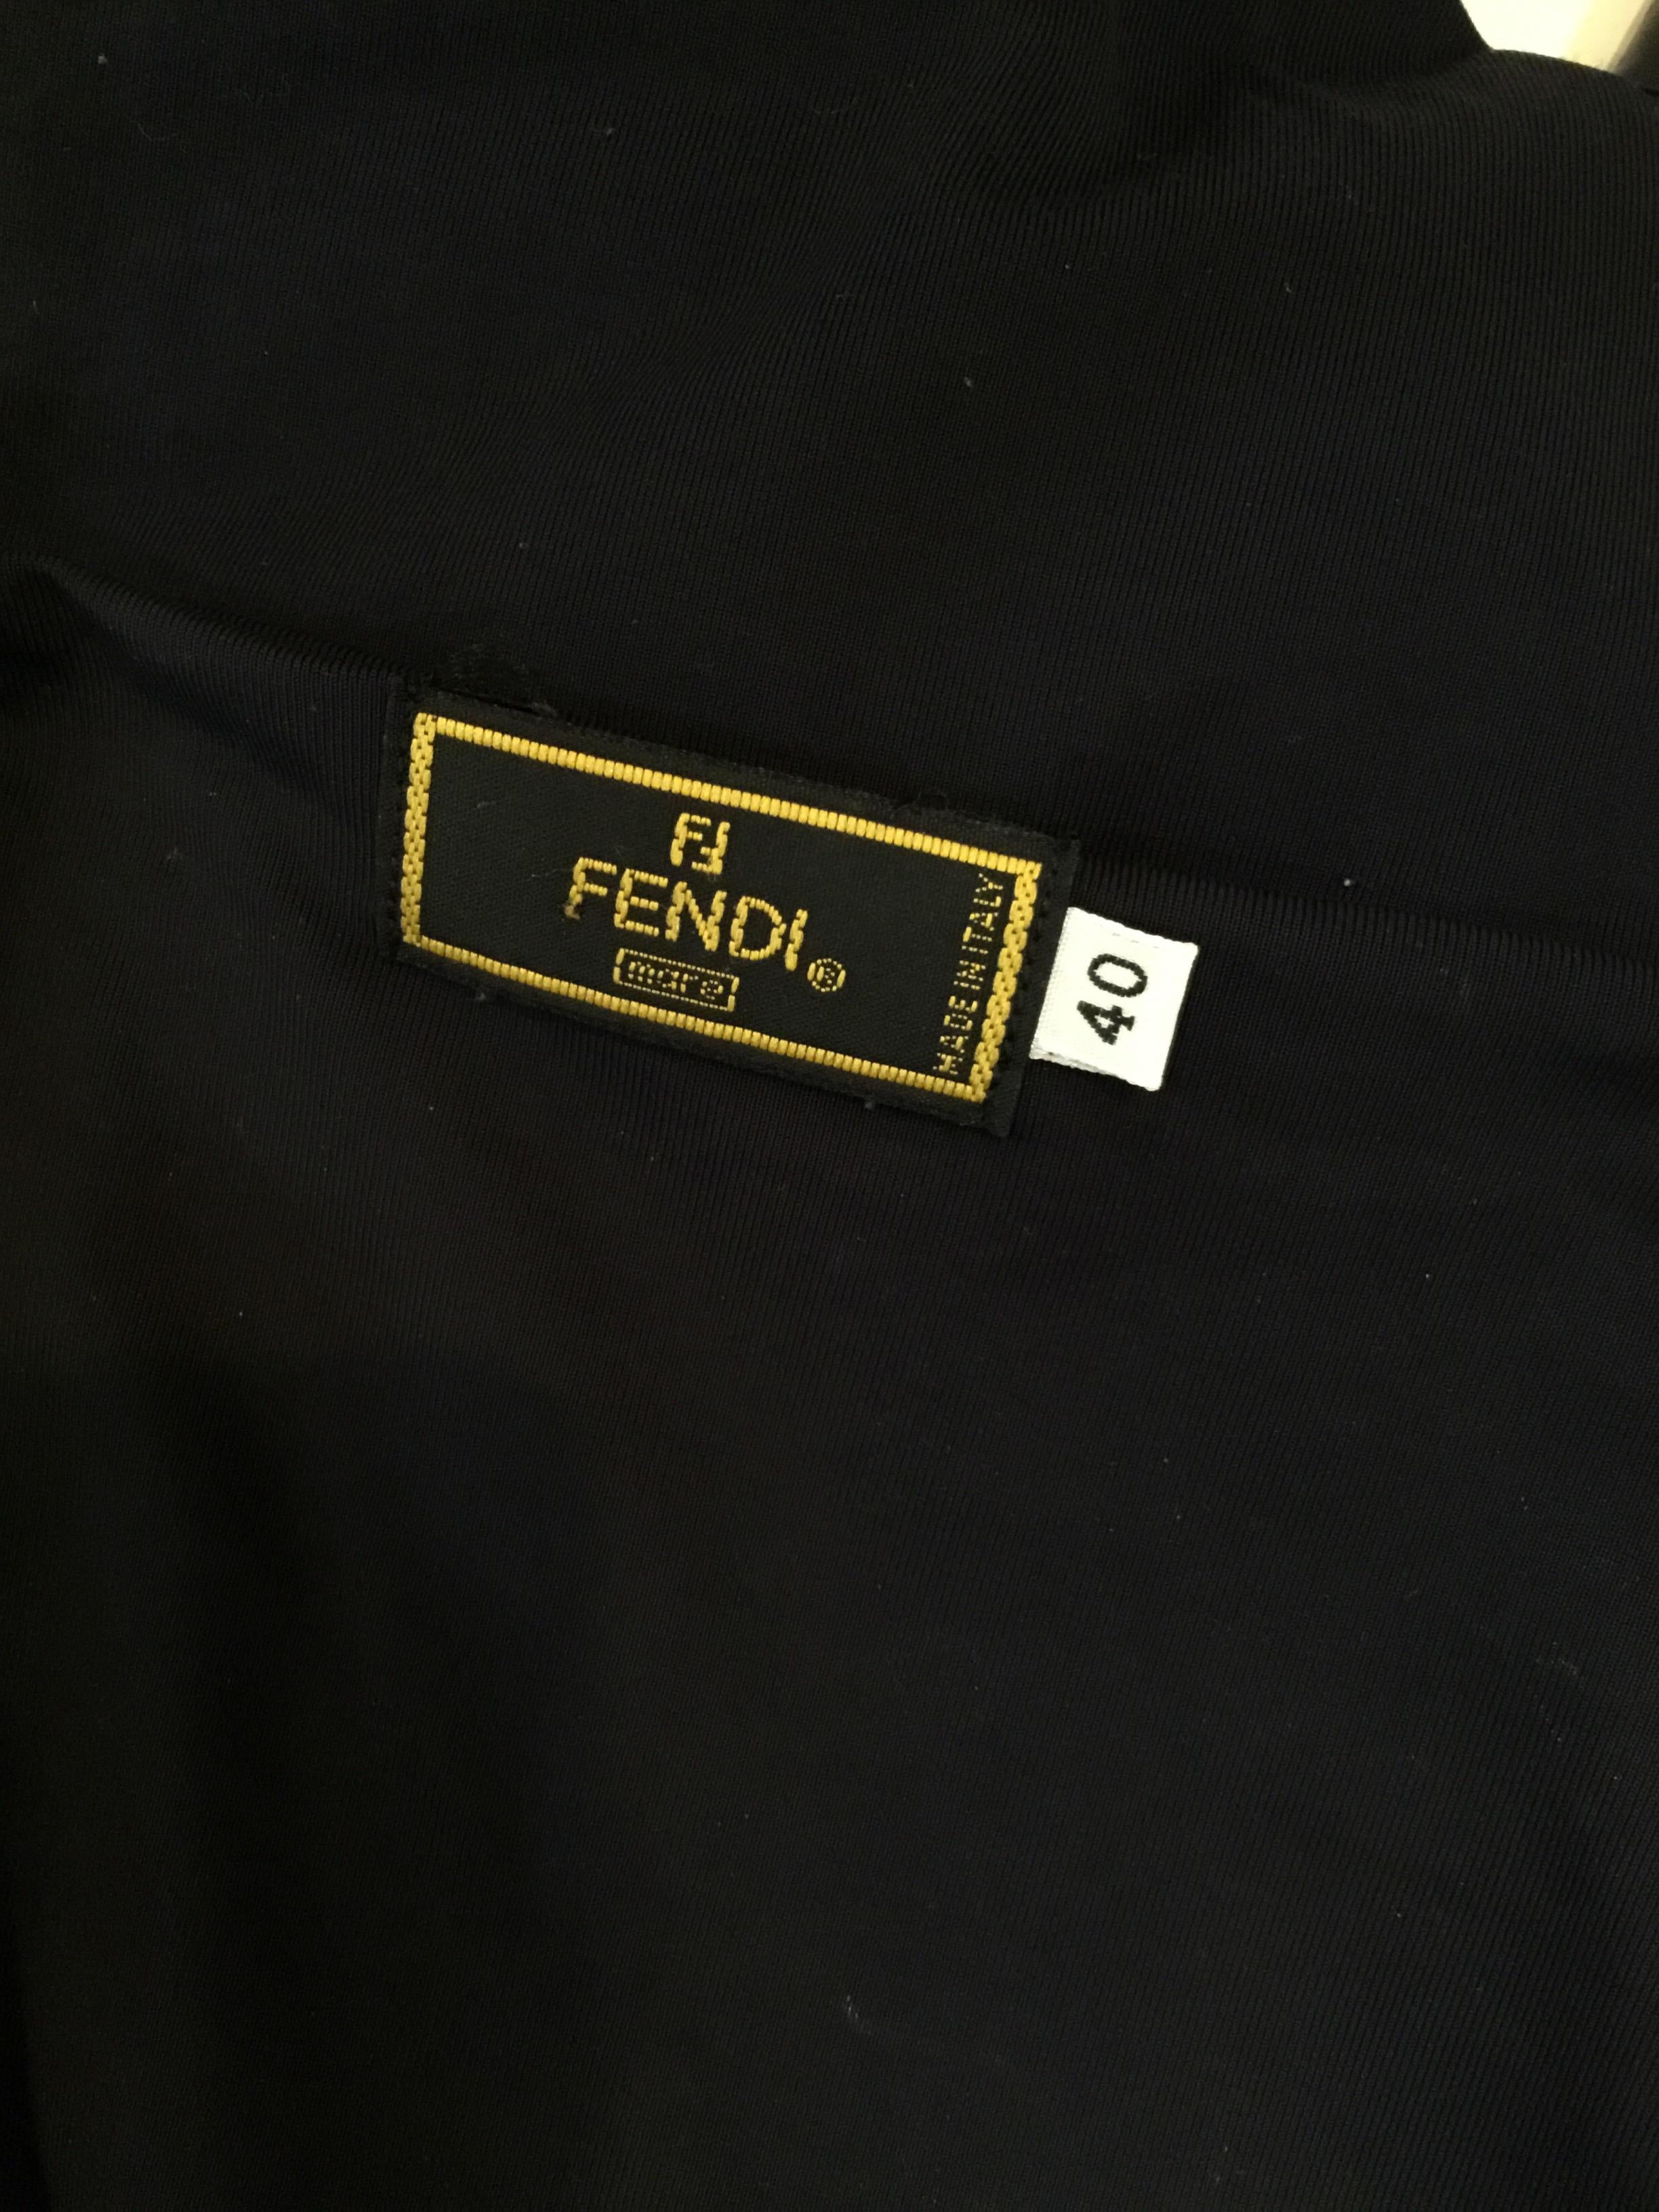 Fendi Jersey Dress with Lucite Detail Cutout Bodice 1